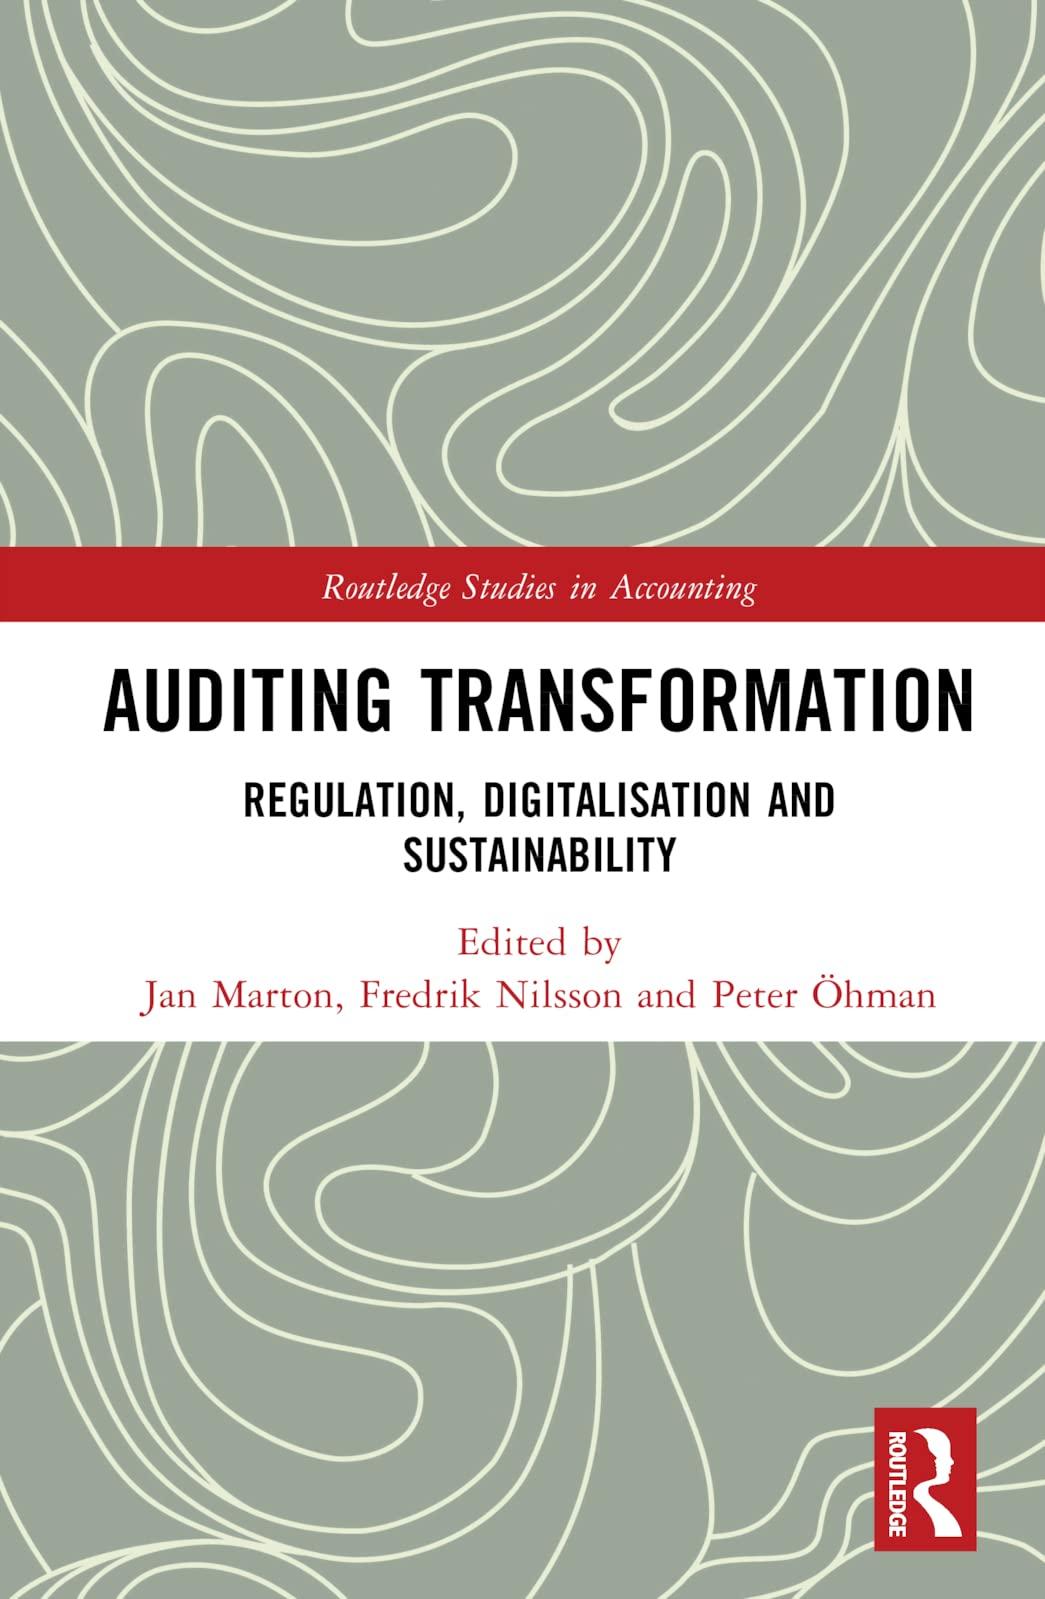 auditing transformation regulation digitalisation and sustainability 1st edition jan marton, fredrik nilsson,